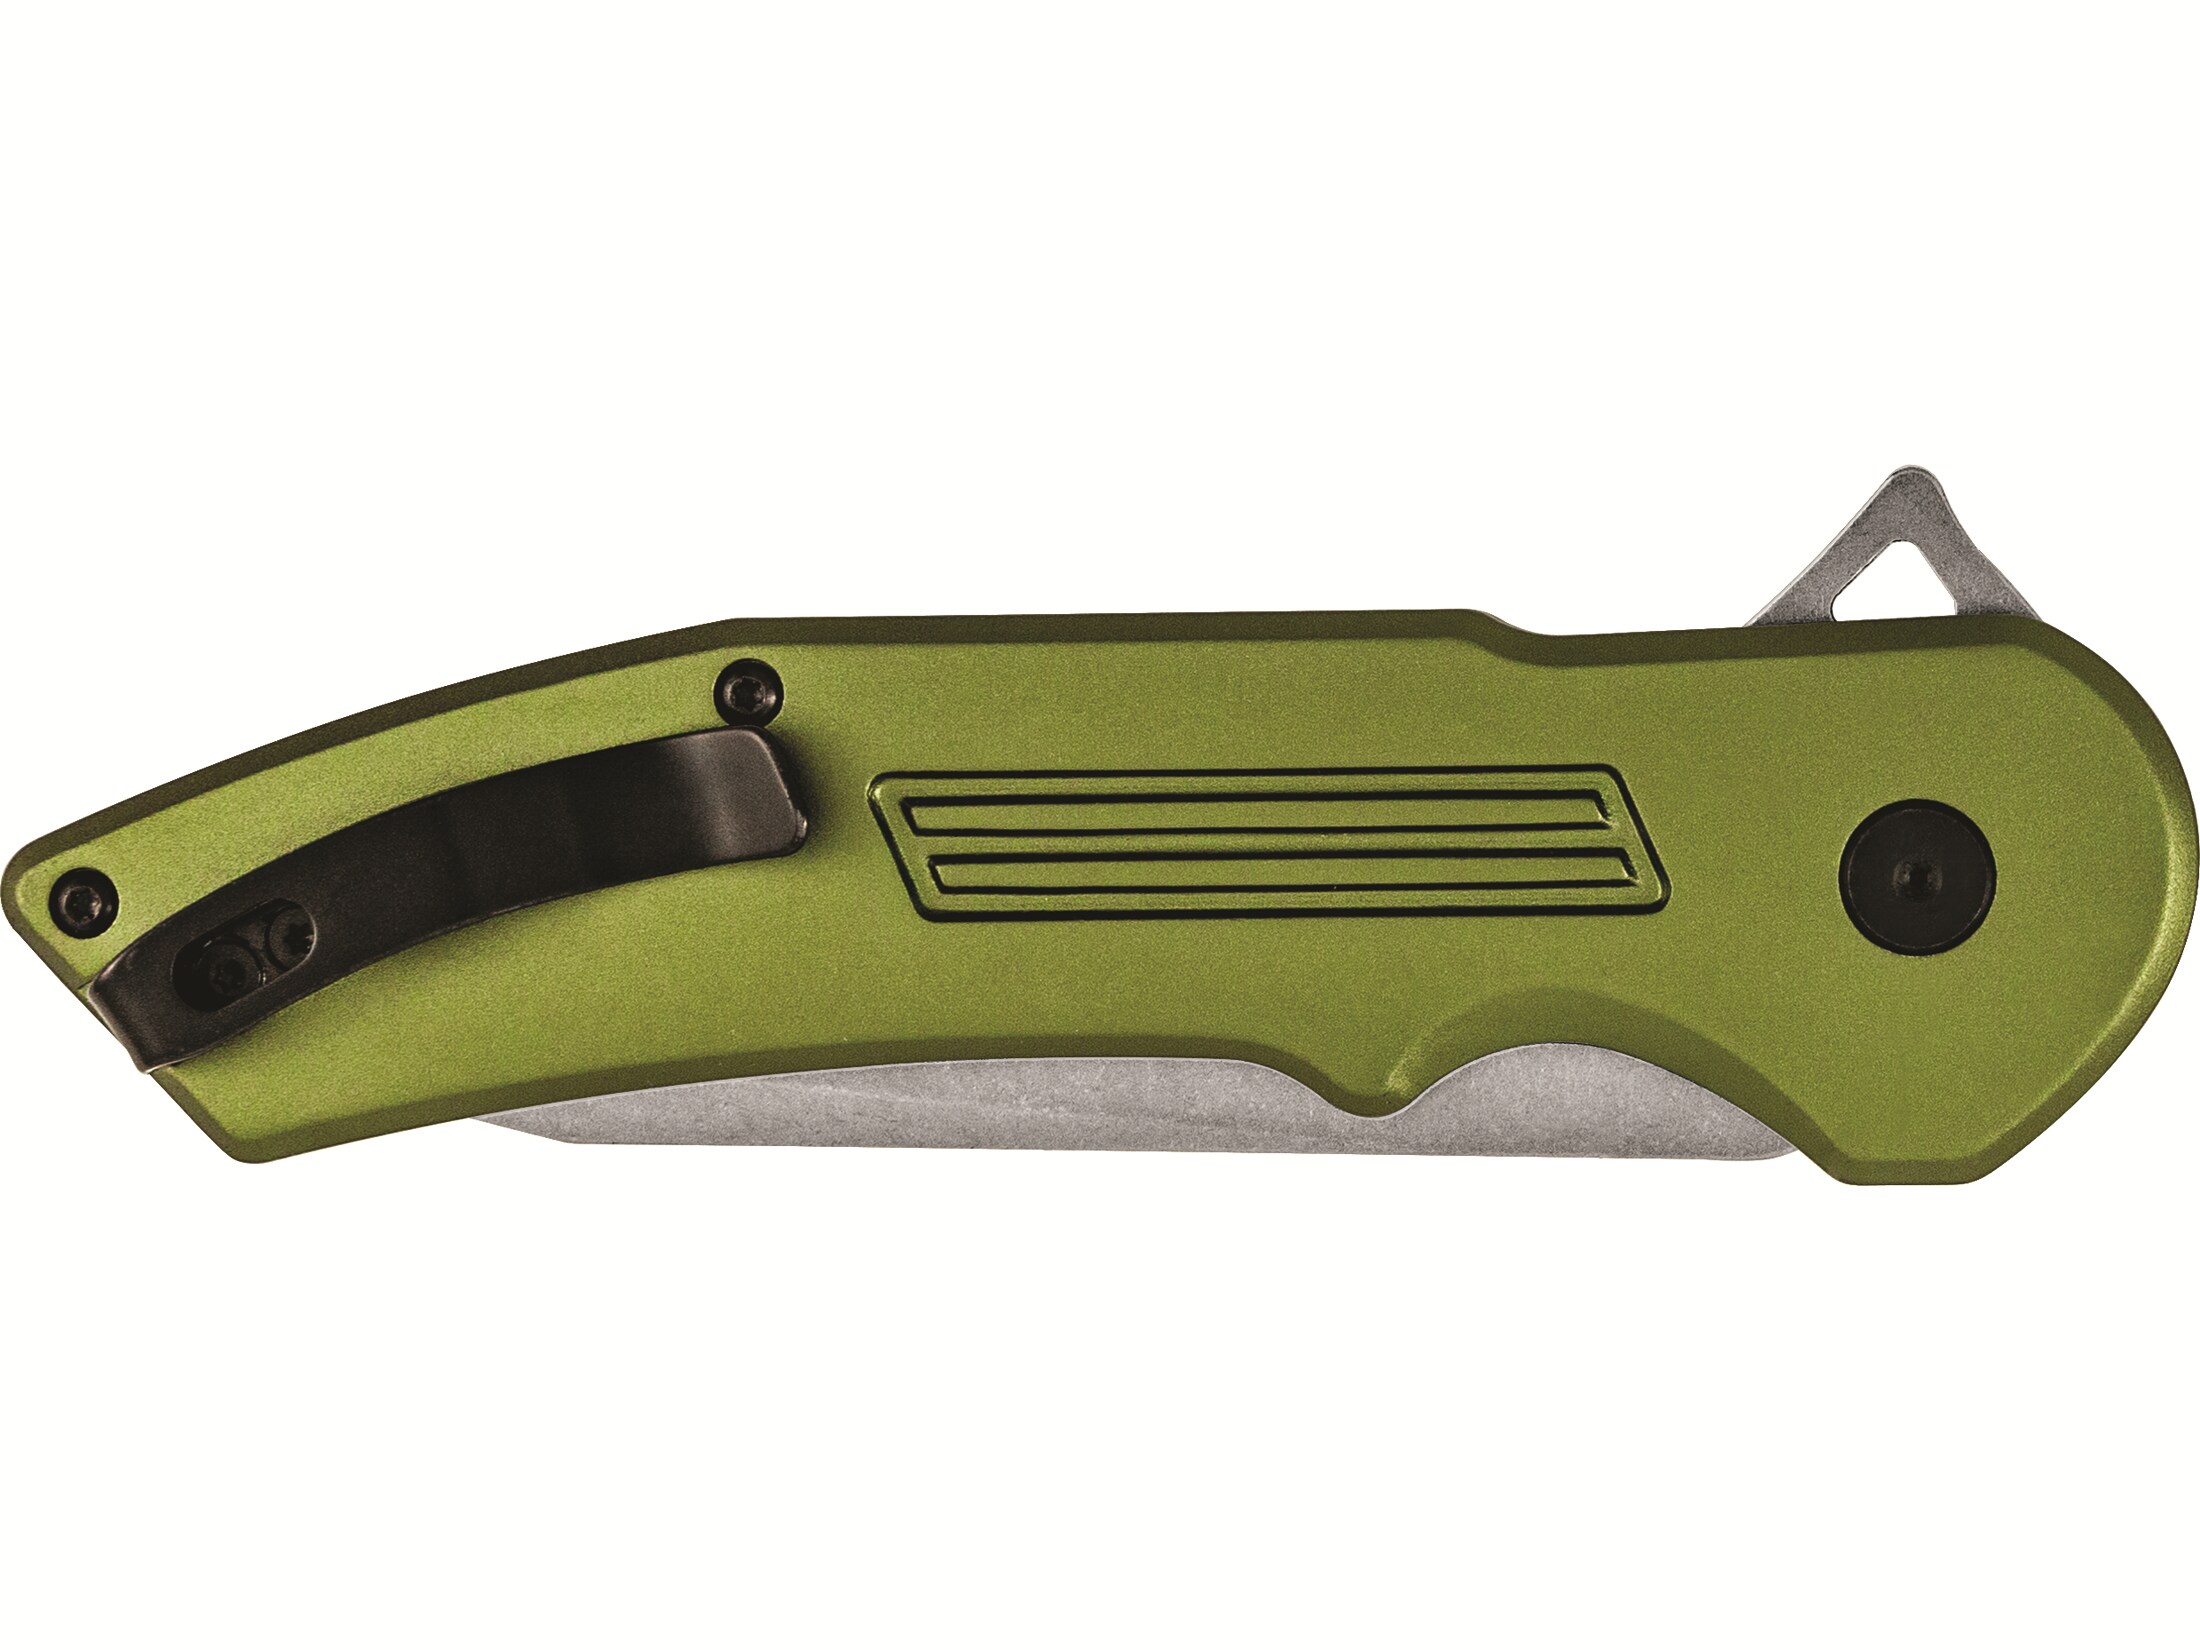 Buck Knives 262 Hexam Assist Folding Knife For Sale